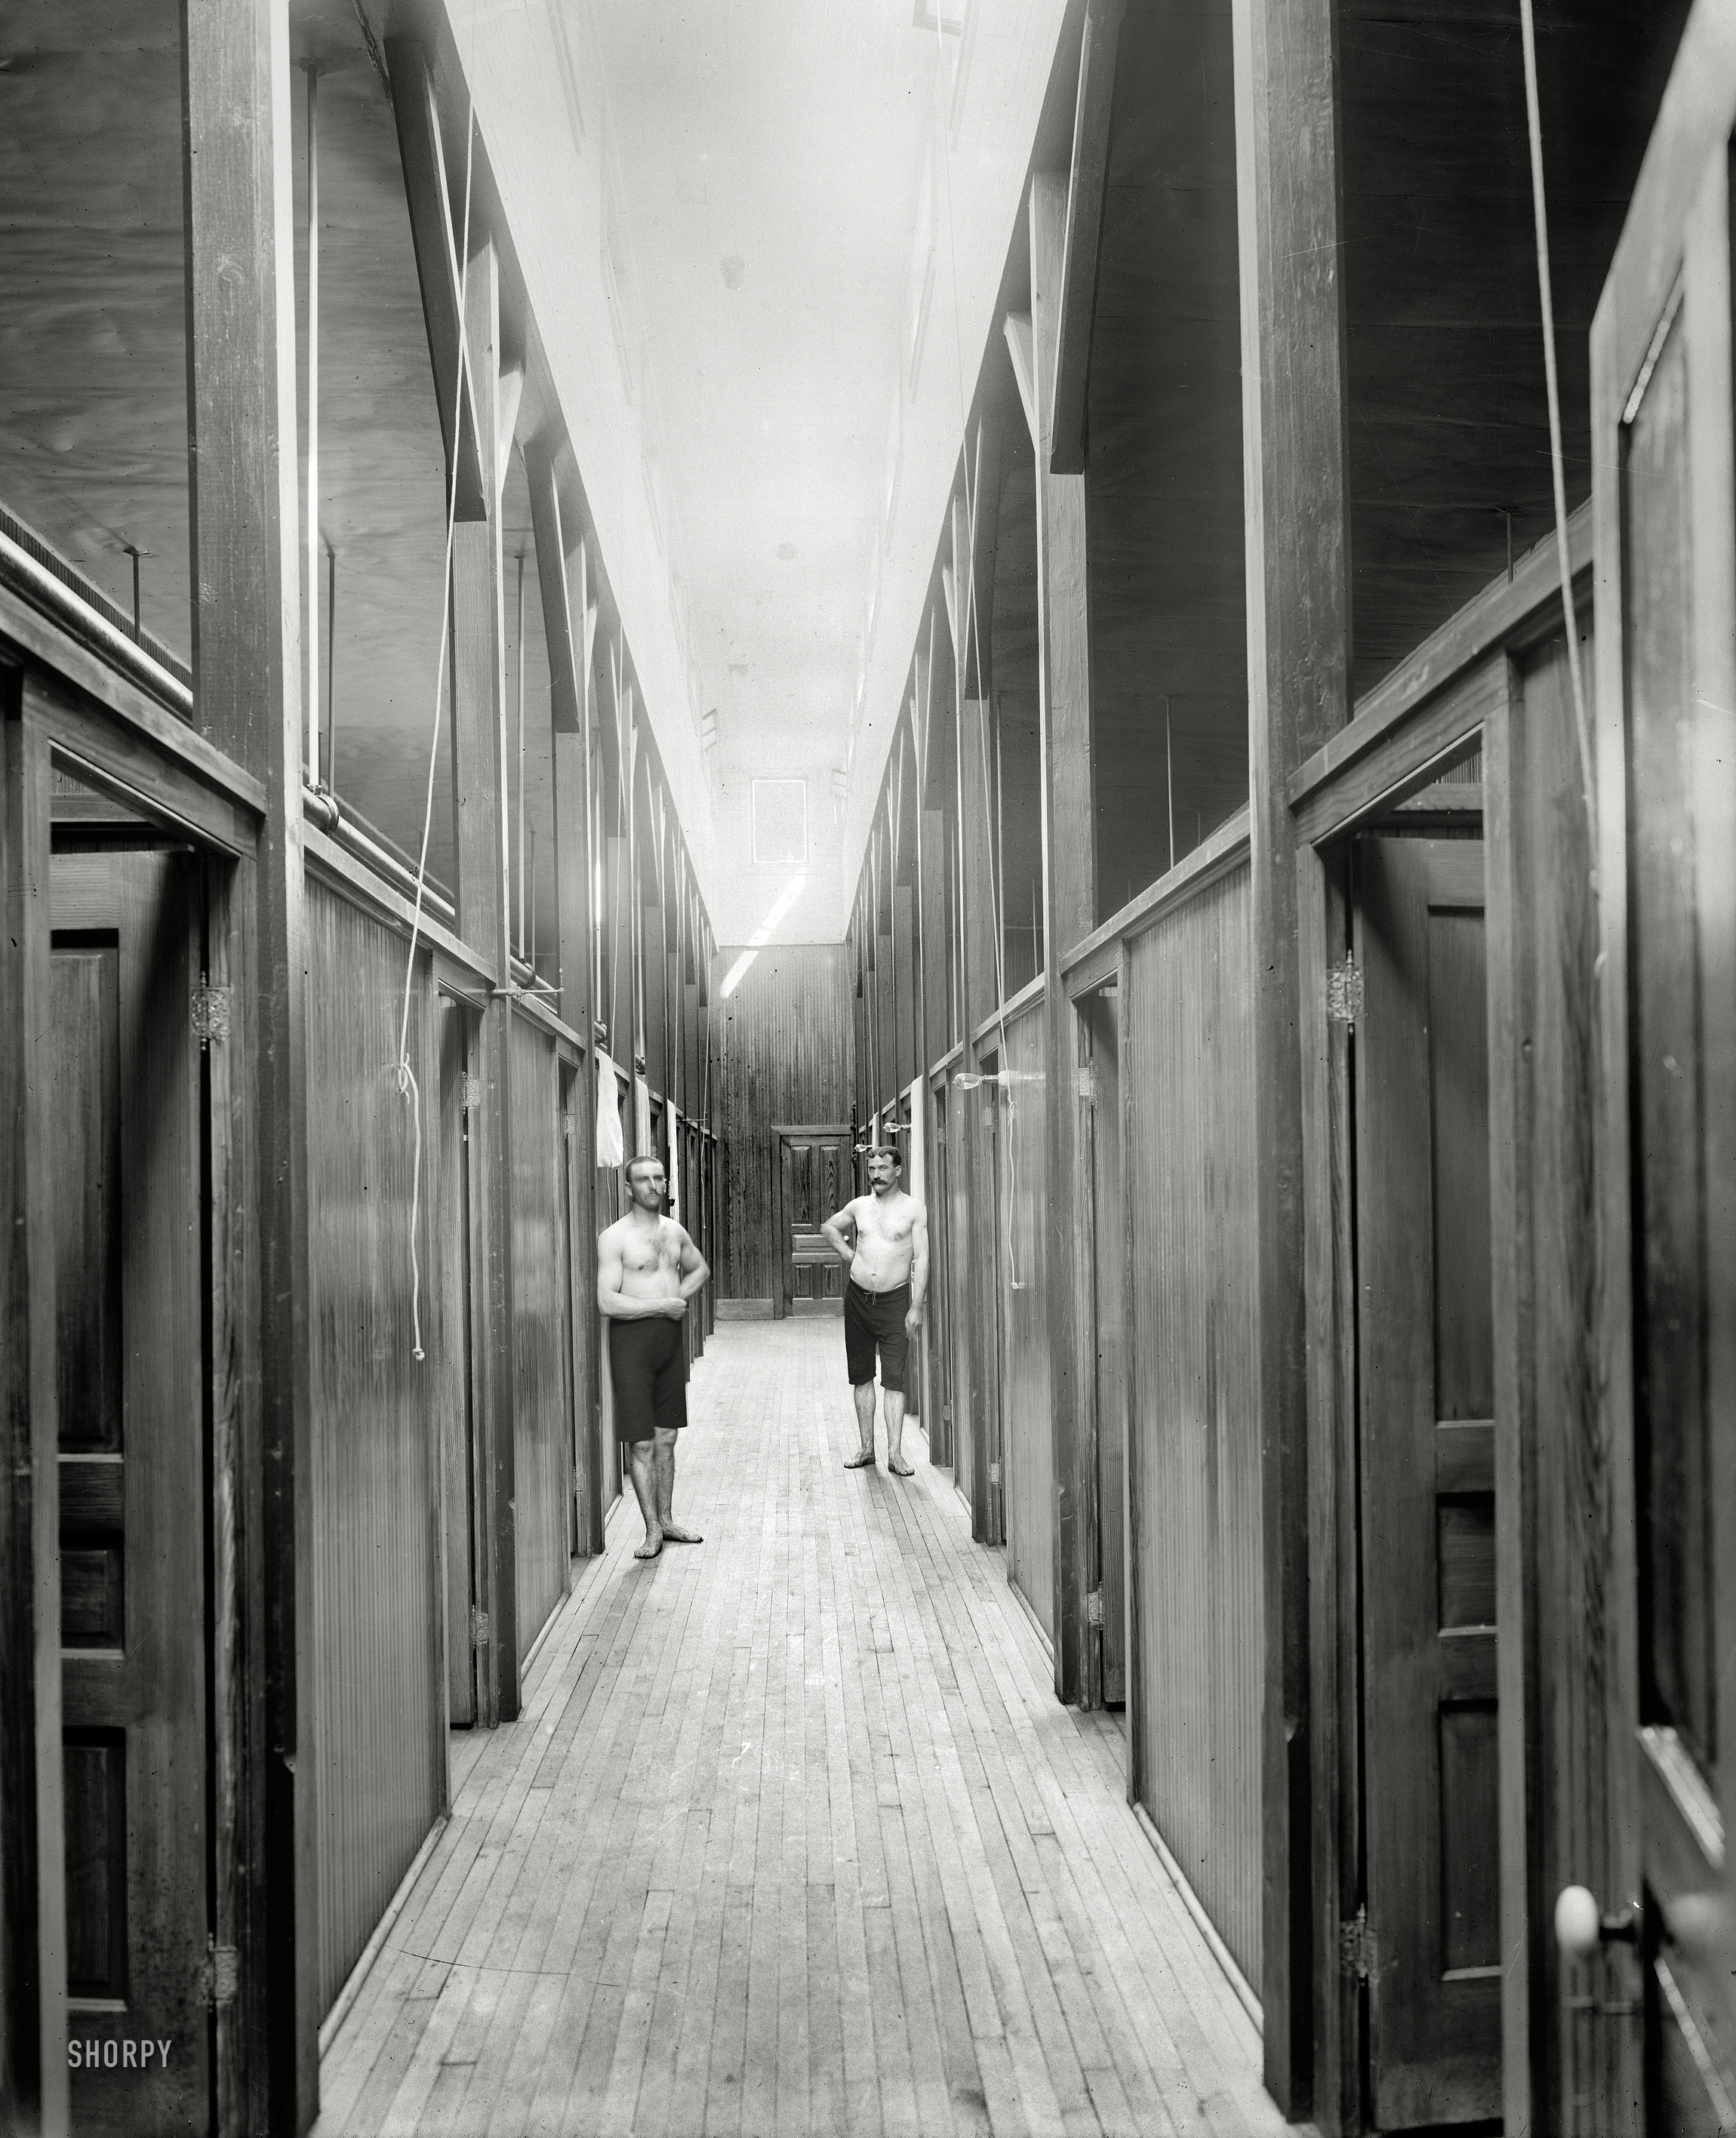 Ypsilanti, Michigan, circa 1900. "Two men in corridor of Mineral Bath House." 8x10 inch dry plate glass negative, Detroit Publishing Company. View full size.